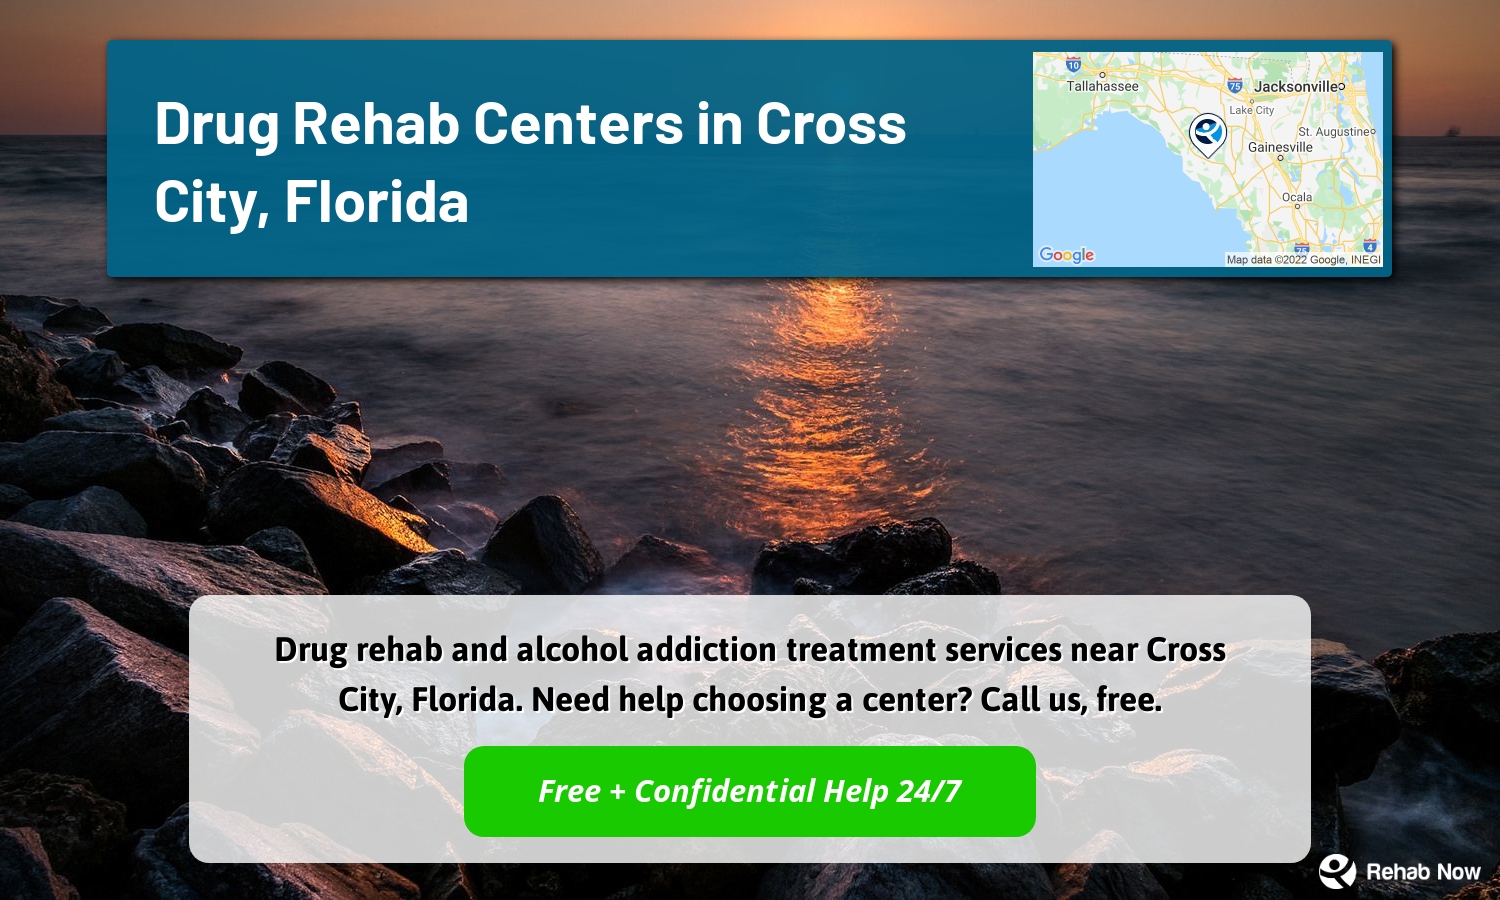 Drug rehab and alcohol addiction treatment services near Cross City, Florida. Need help choosing a center? Call us, free.